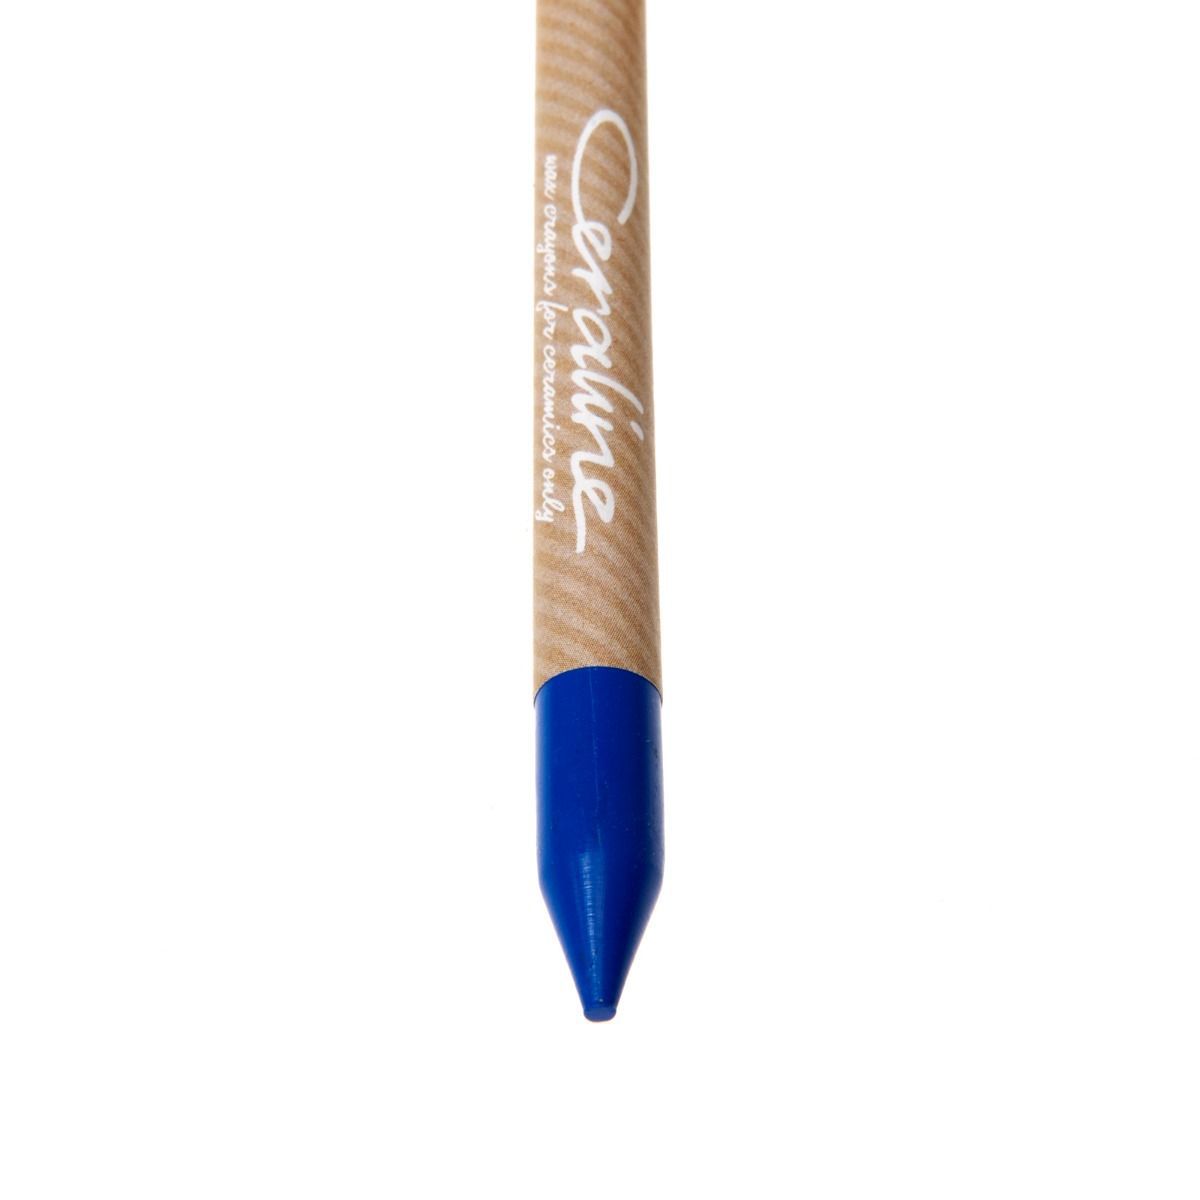 Ceraline - Wax crayons for ceramics